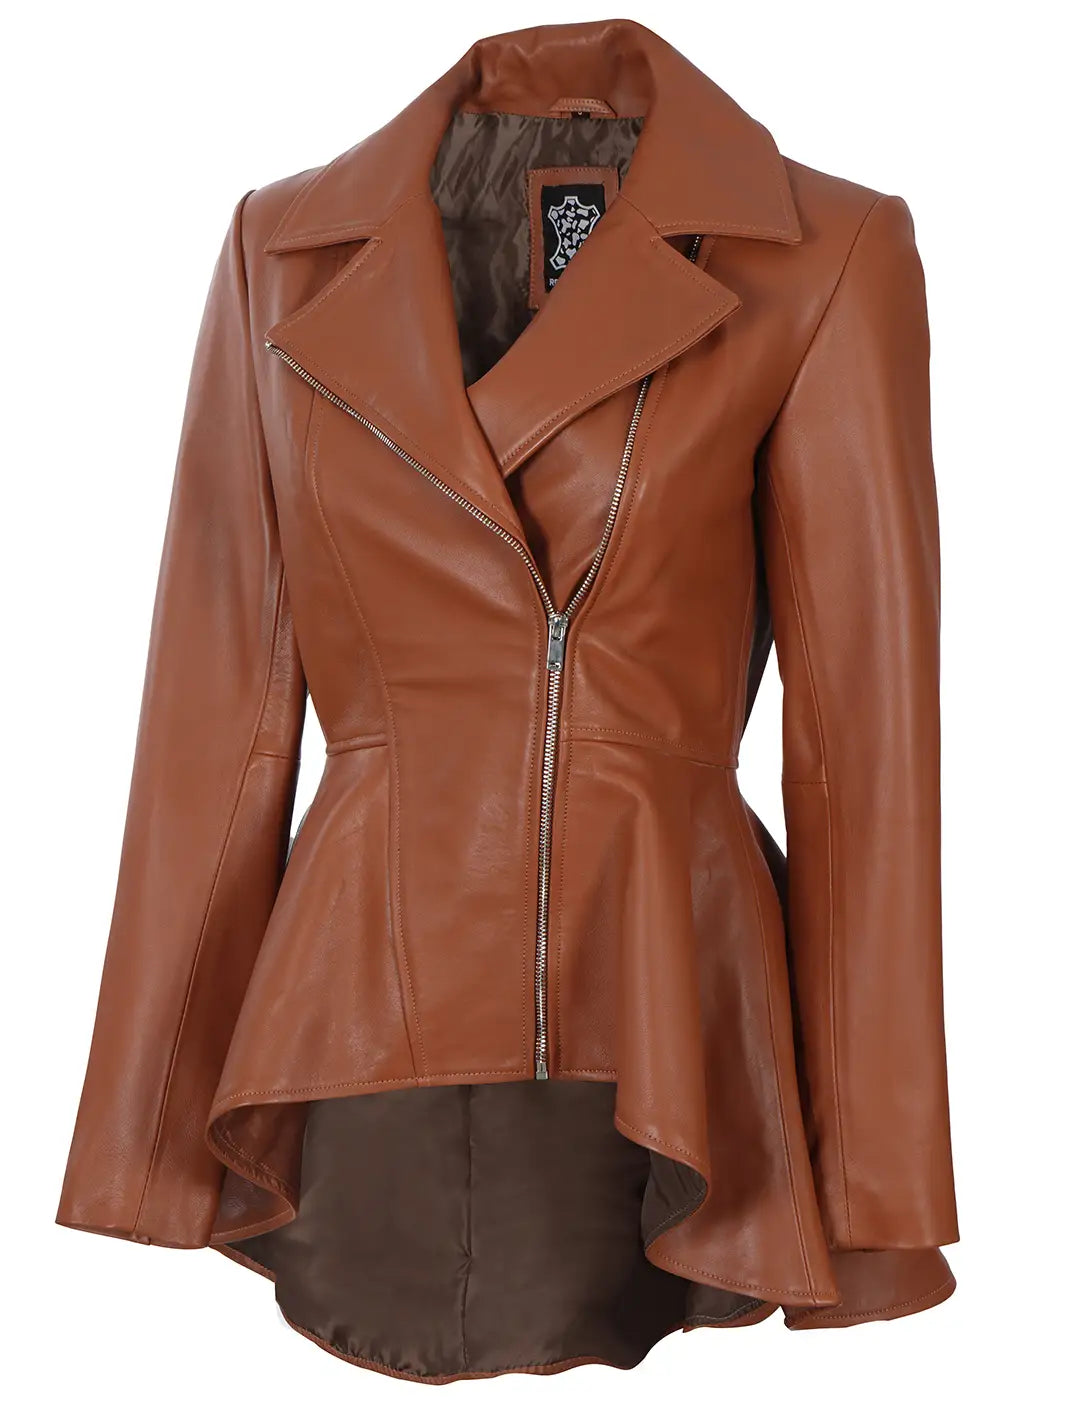 Real leather peplum leather jacket